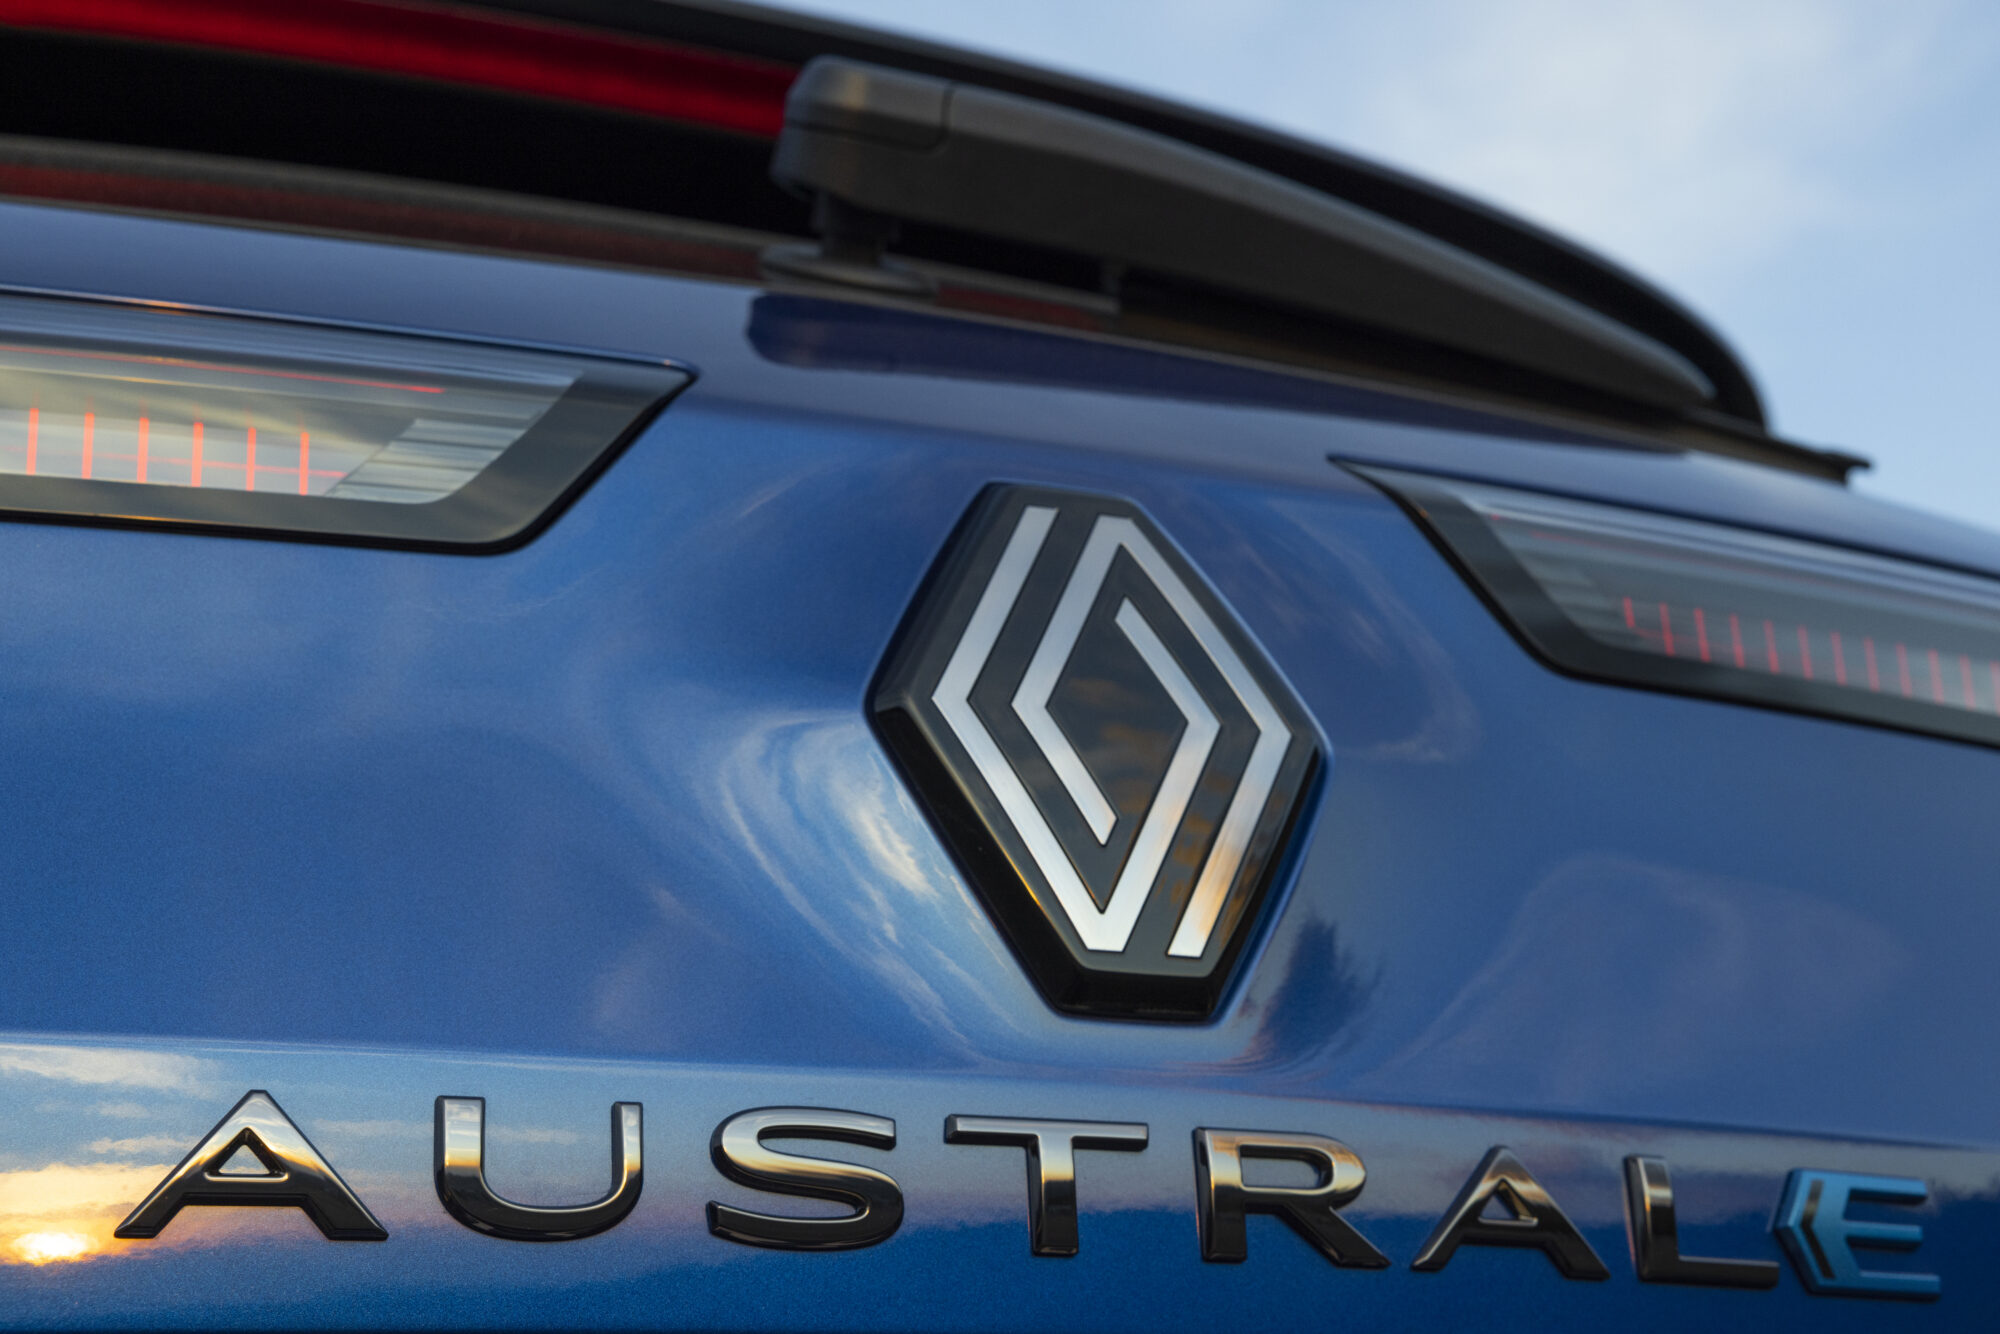 The All-New Renault Austral Esprit Alpine E-TECH Hybrid - Iron Blue